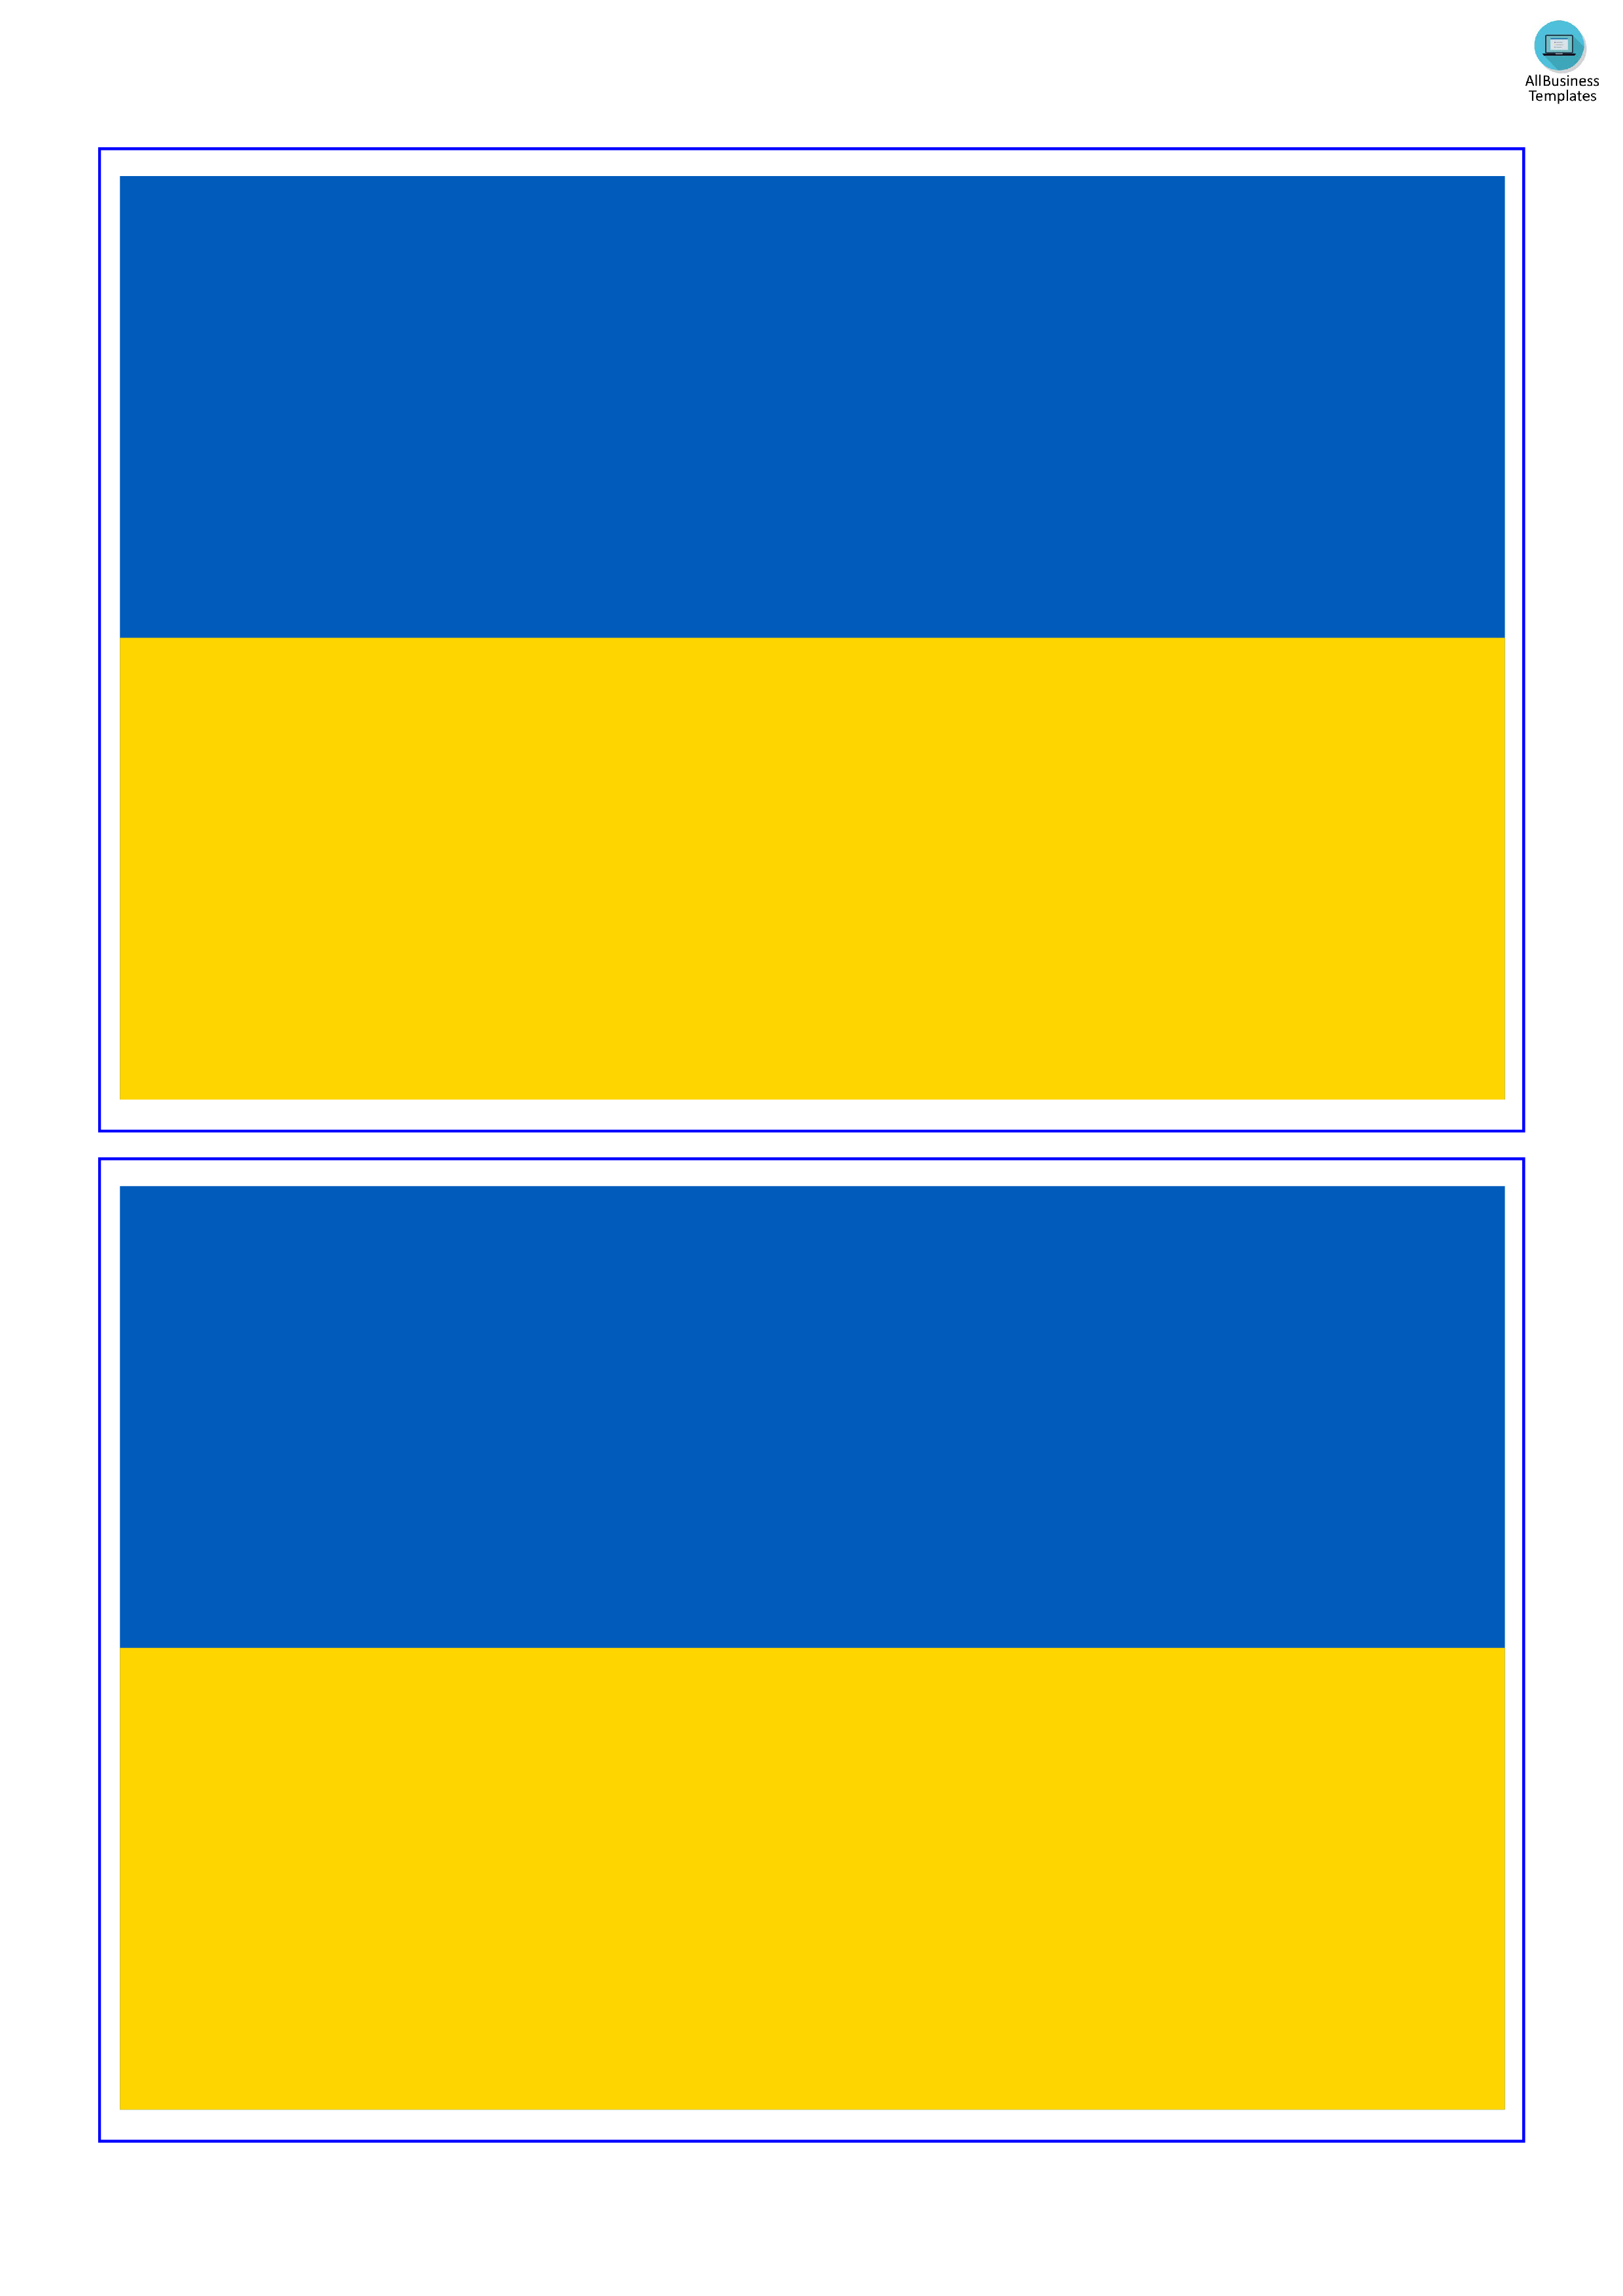 Ukraine Flag main image